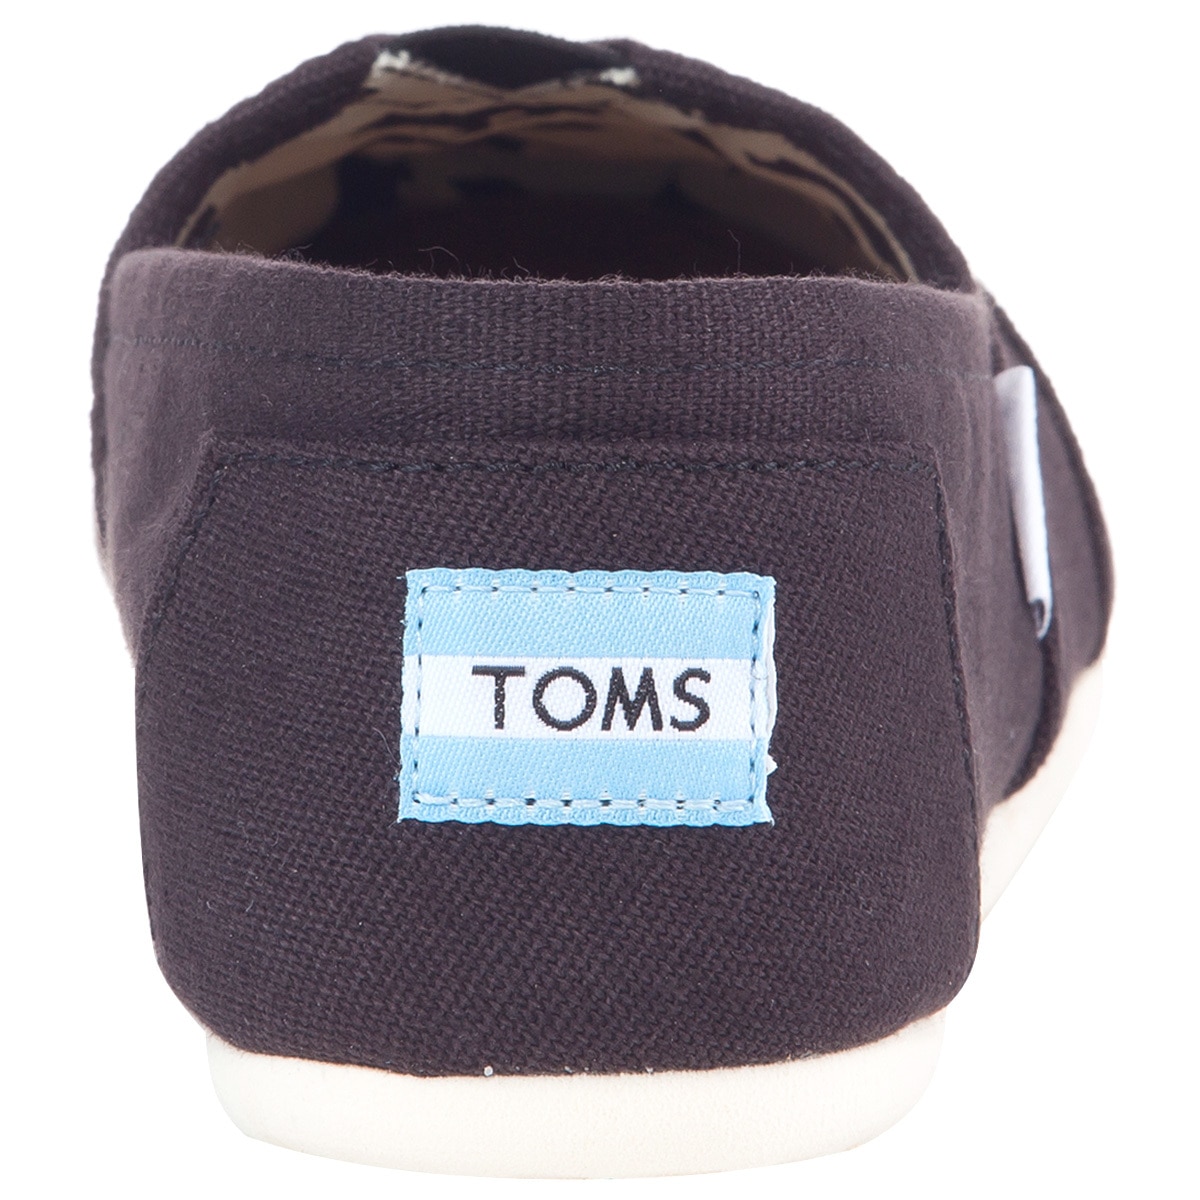 Toms Women's Alpargata Shoe - Black